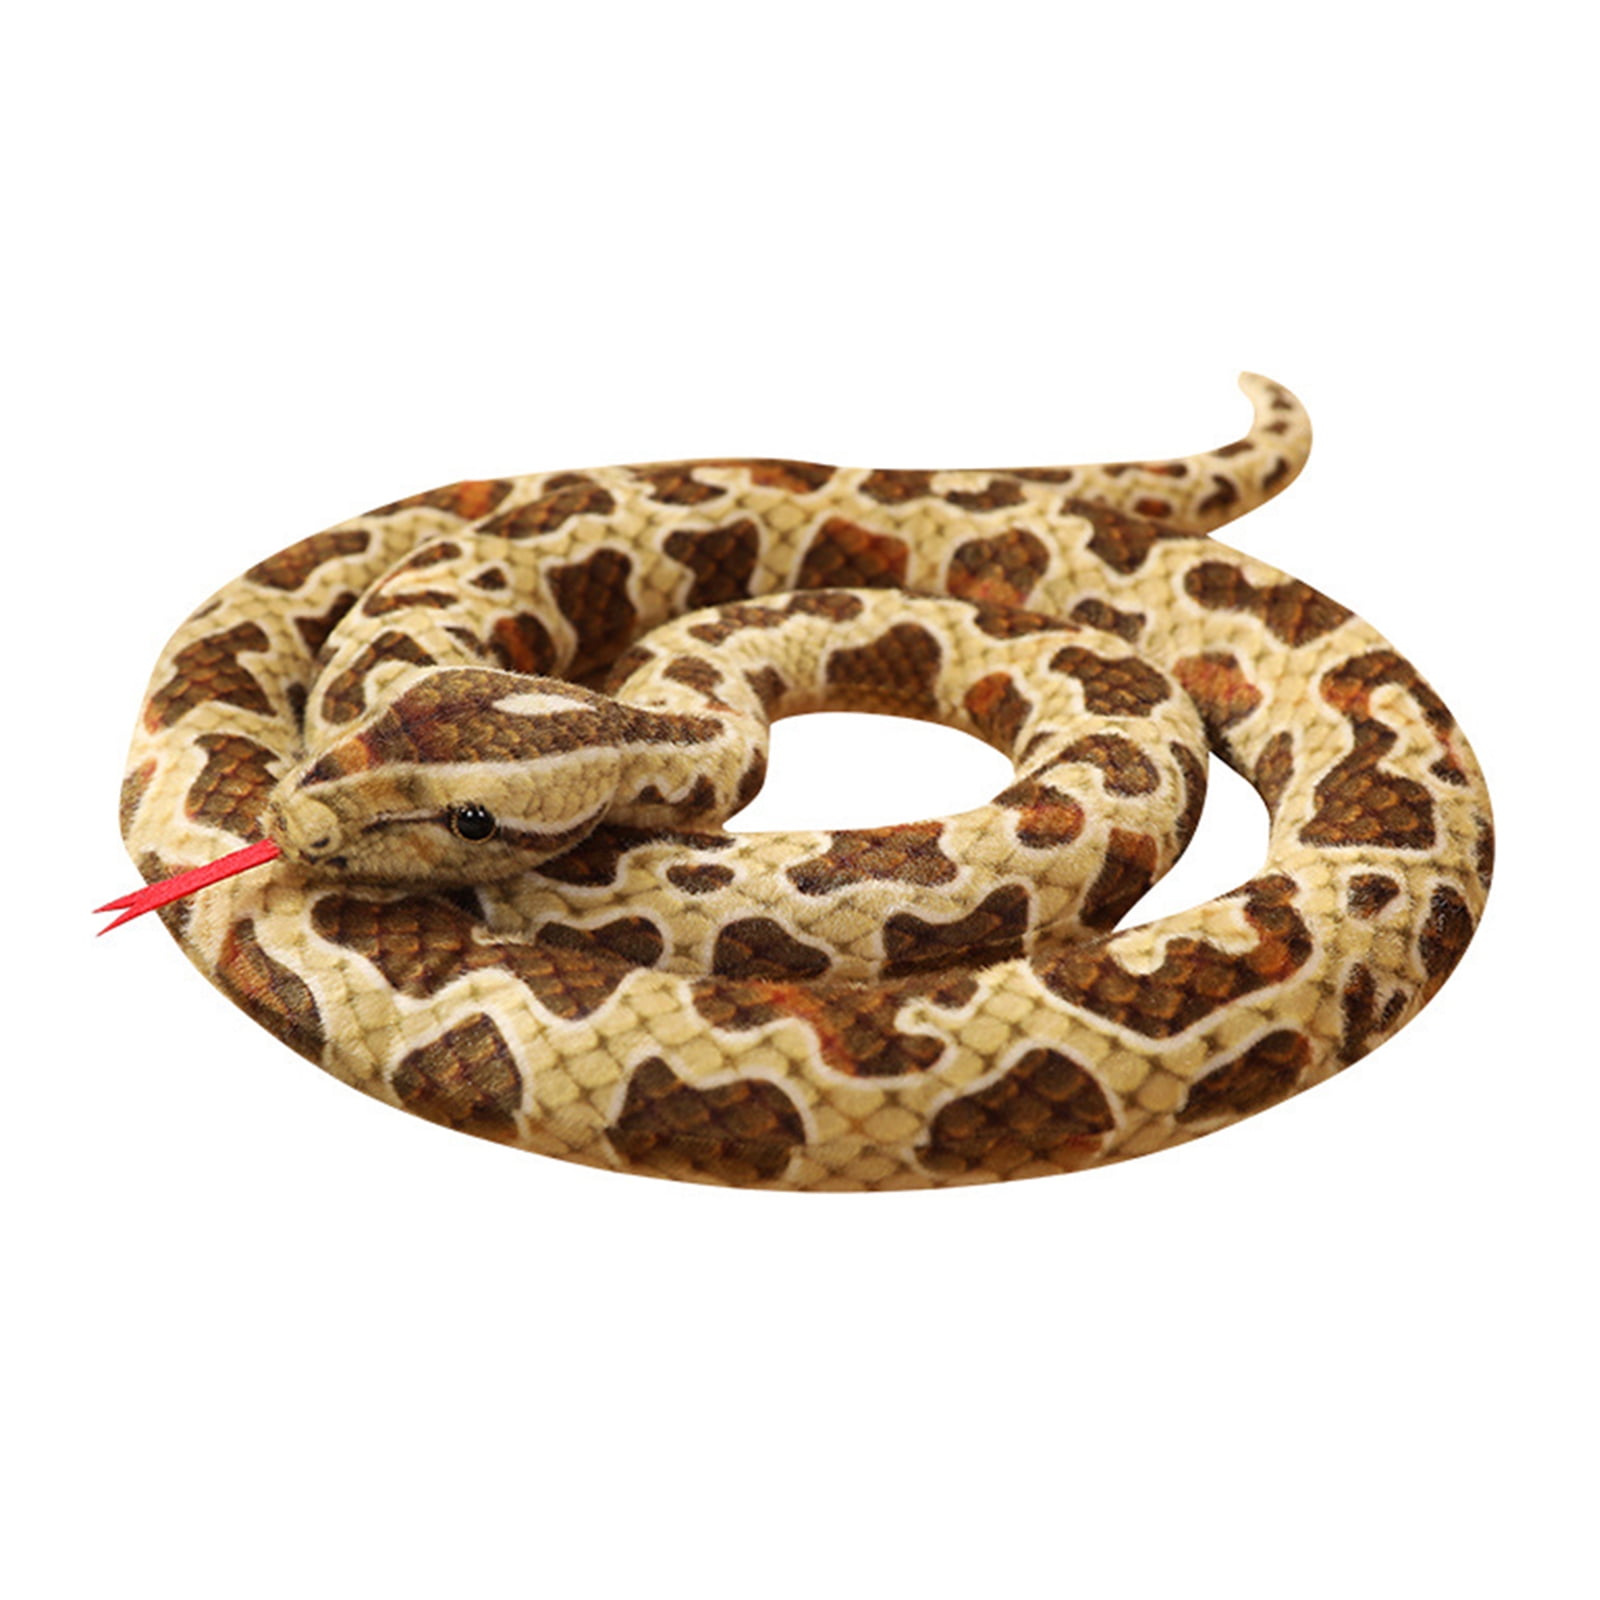 Giant Boa Constrictor Large Stuffed Animal Snake Plush Realistic Toy ...